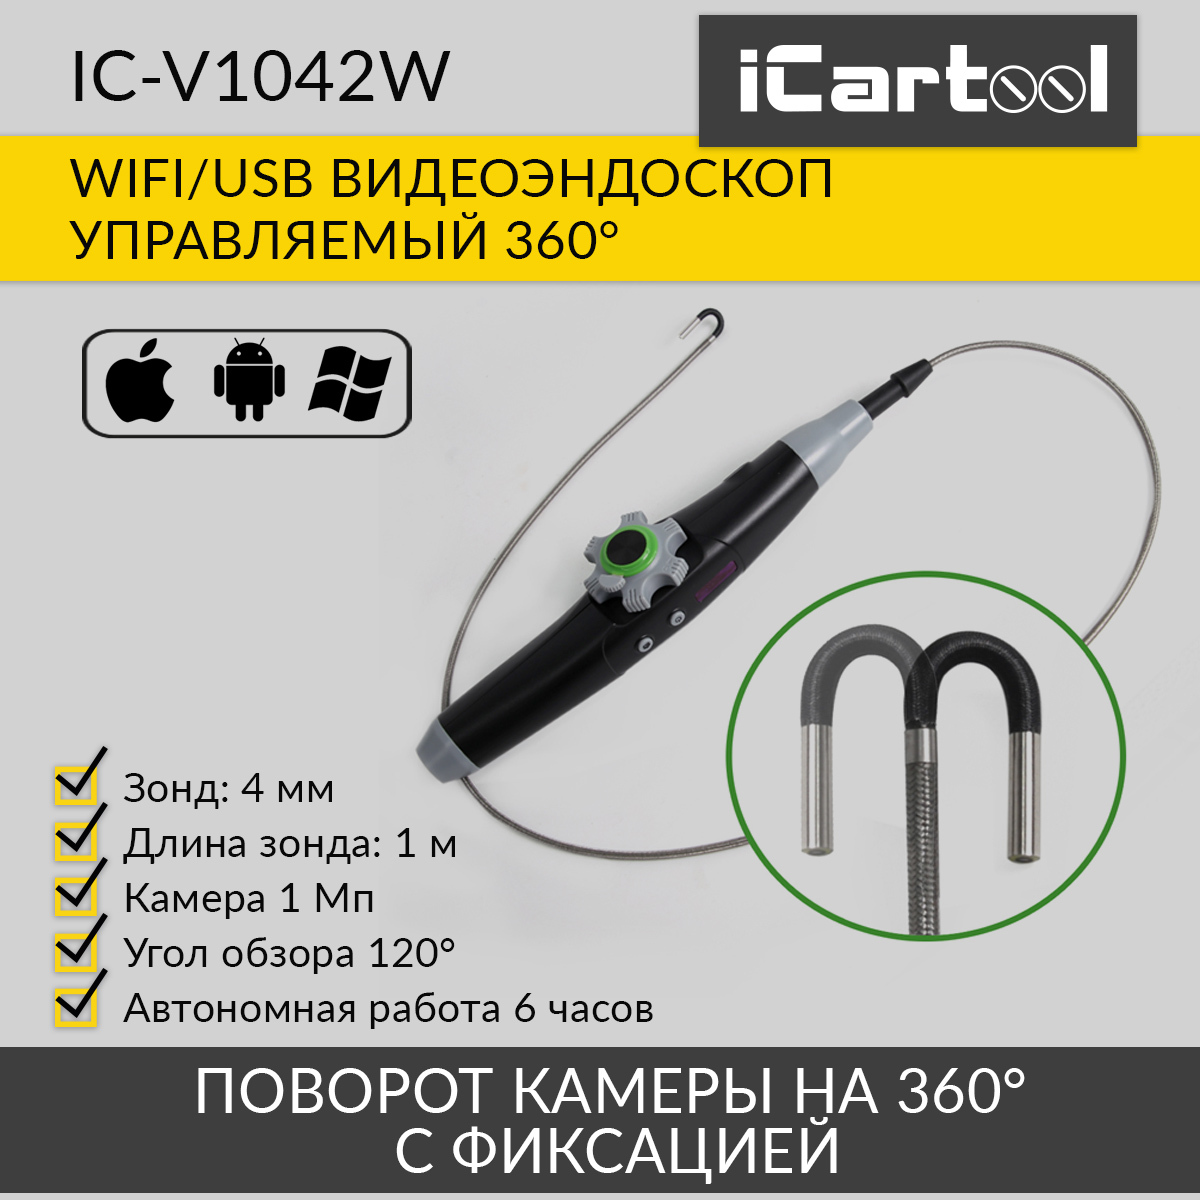 Видеоэндоскоп управляемый iCartool IC-V1042W WIFI/USB, 1Мп, 1168х720, 1м, 4мм зонд, 360°